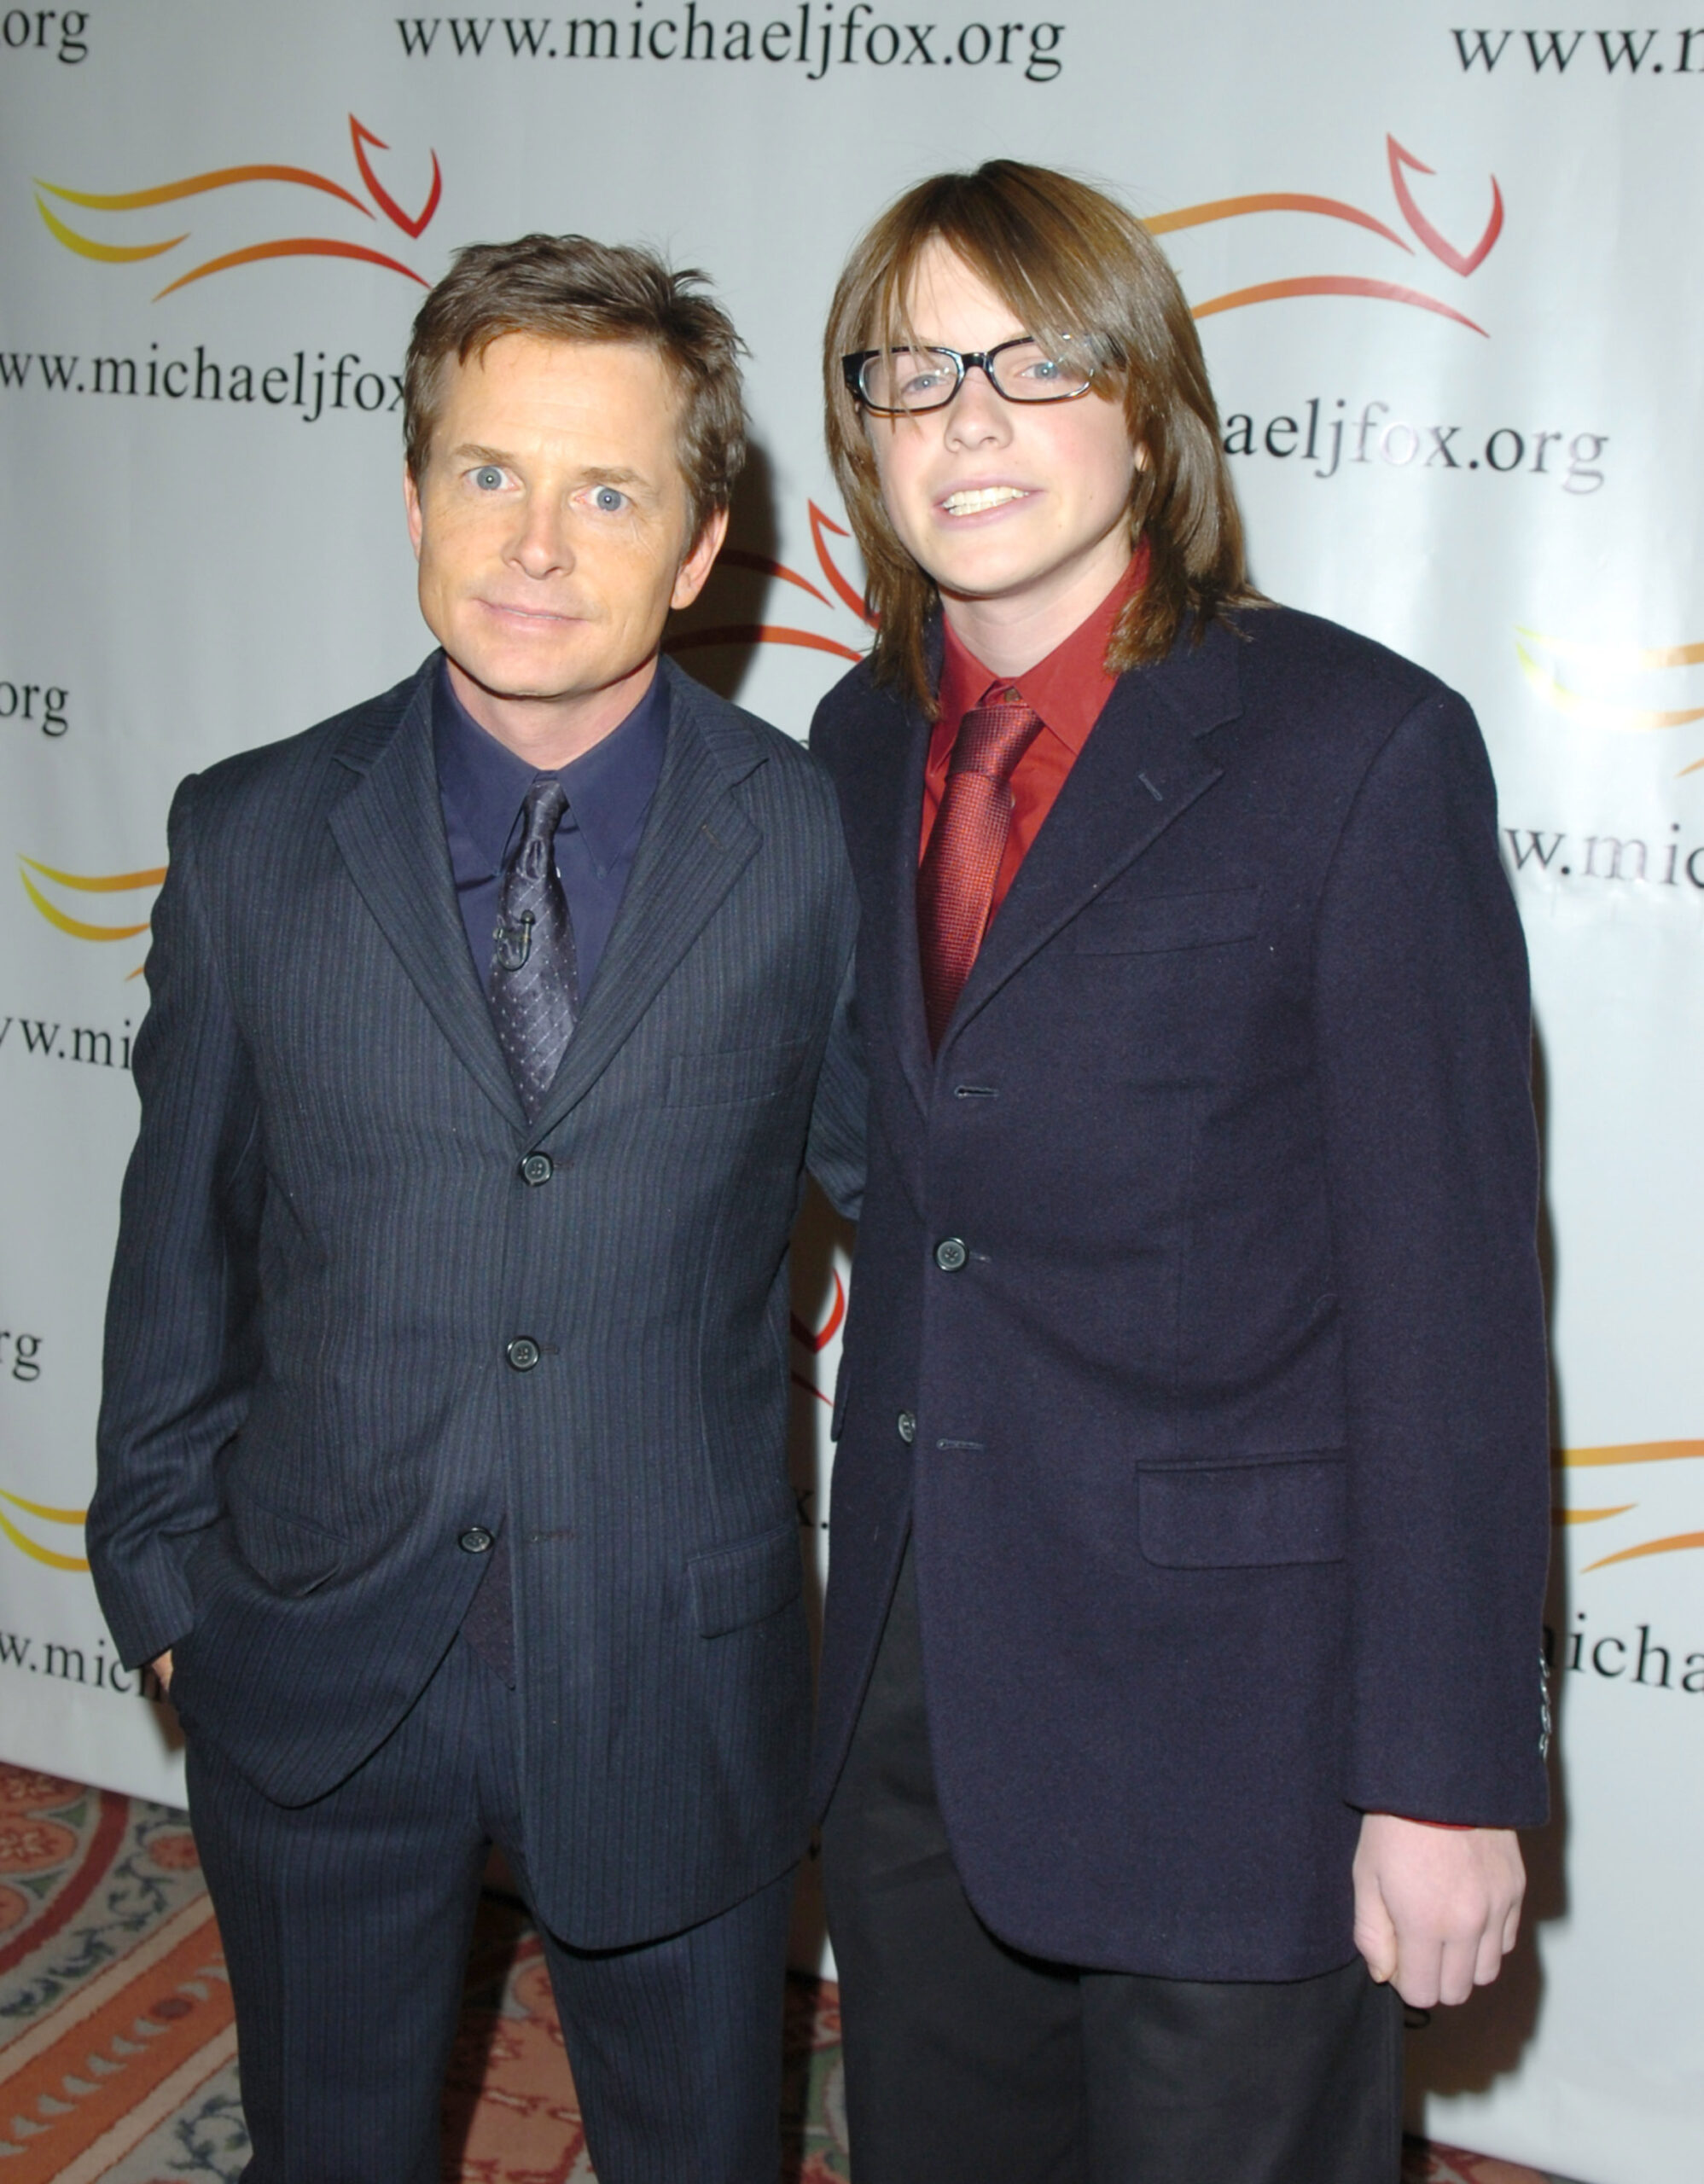 Michael J. Fox and Sam Michael Fox during the 